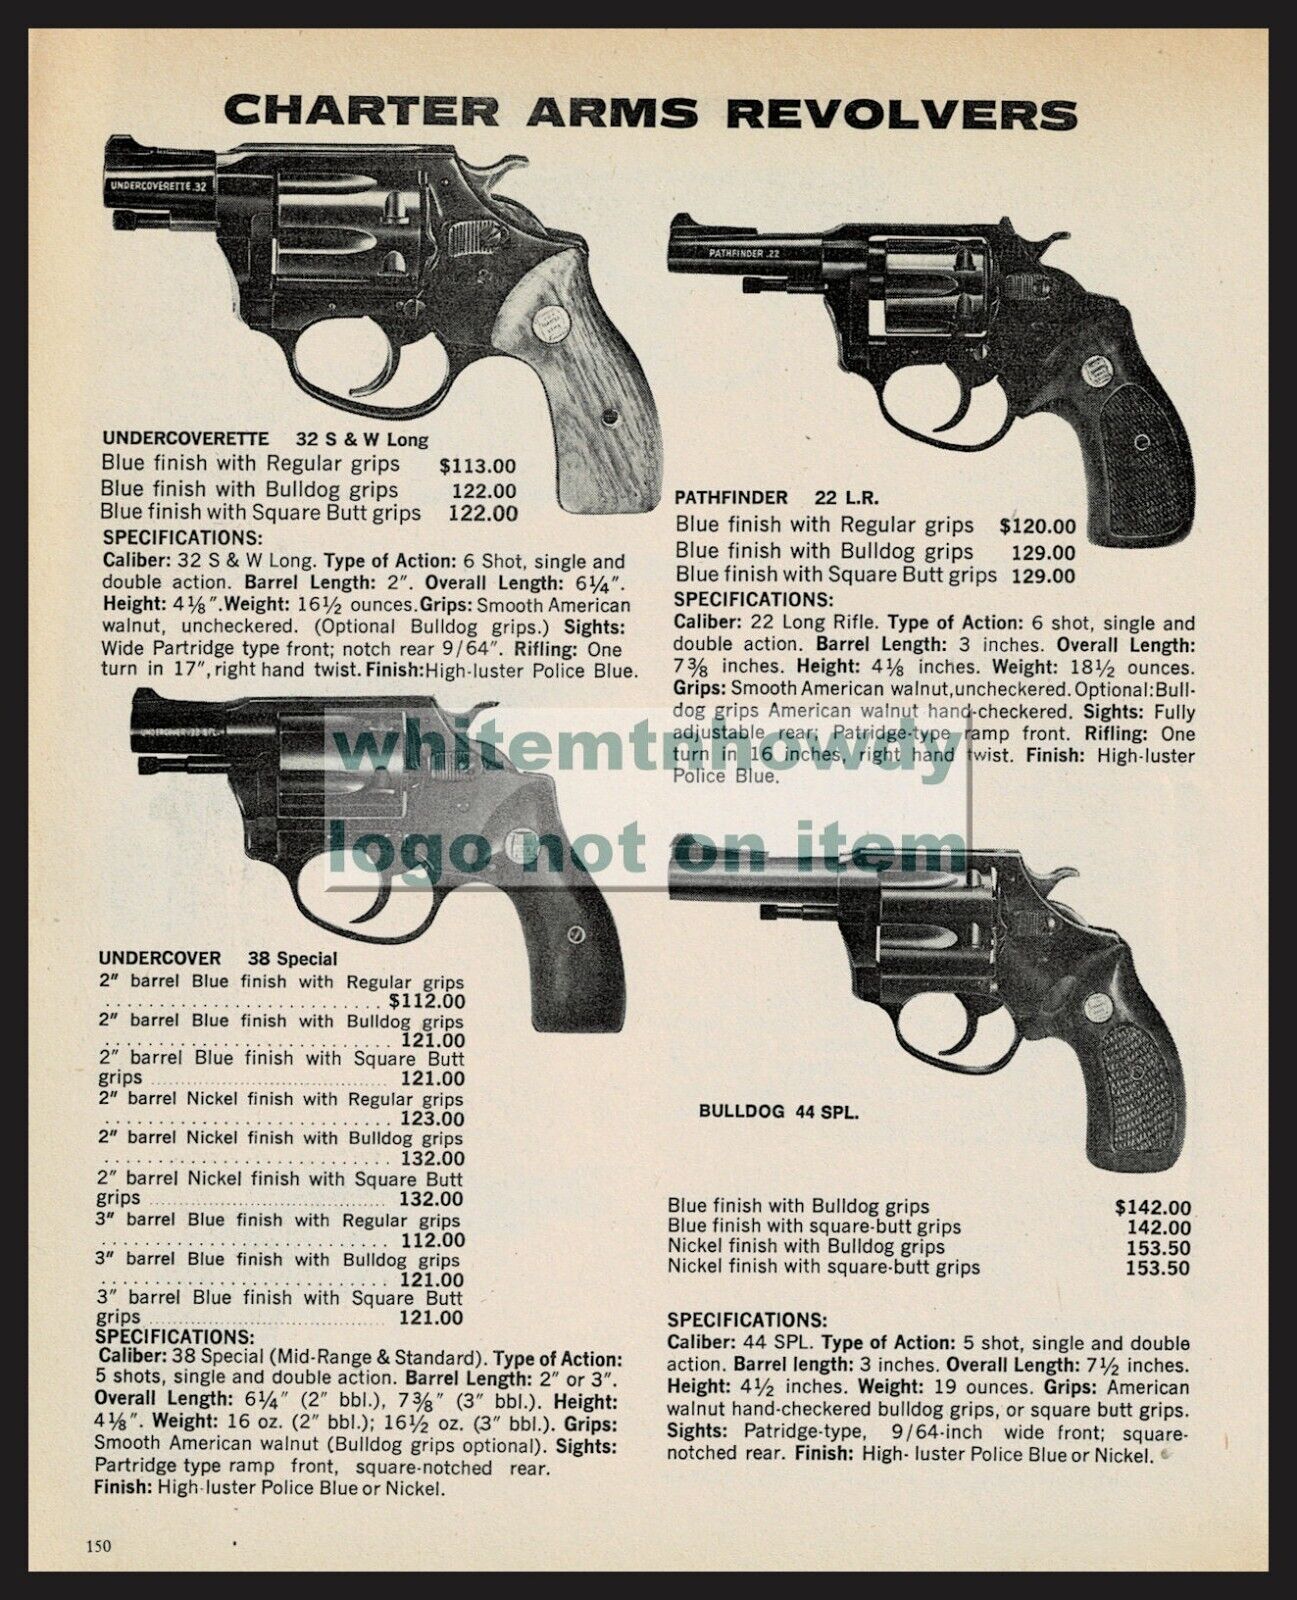 1978 CHARTER ARMS Undercoverette Pathfinder Undercover Bulldog Revolver PRINT AD